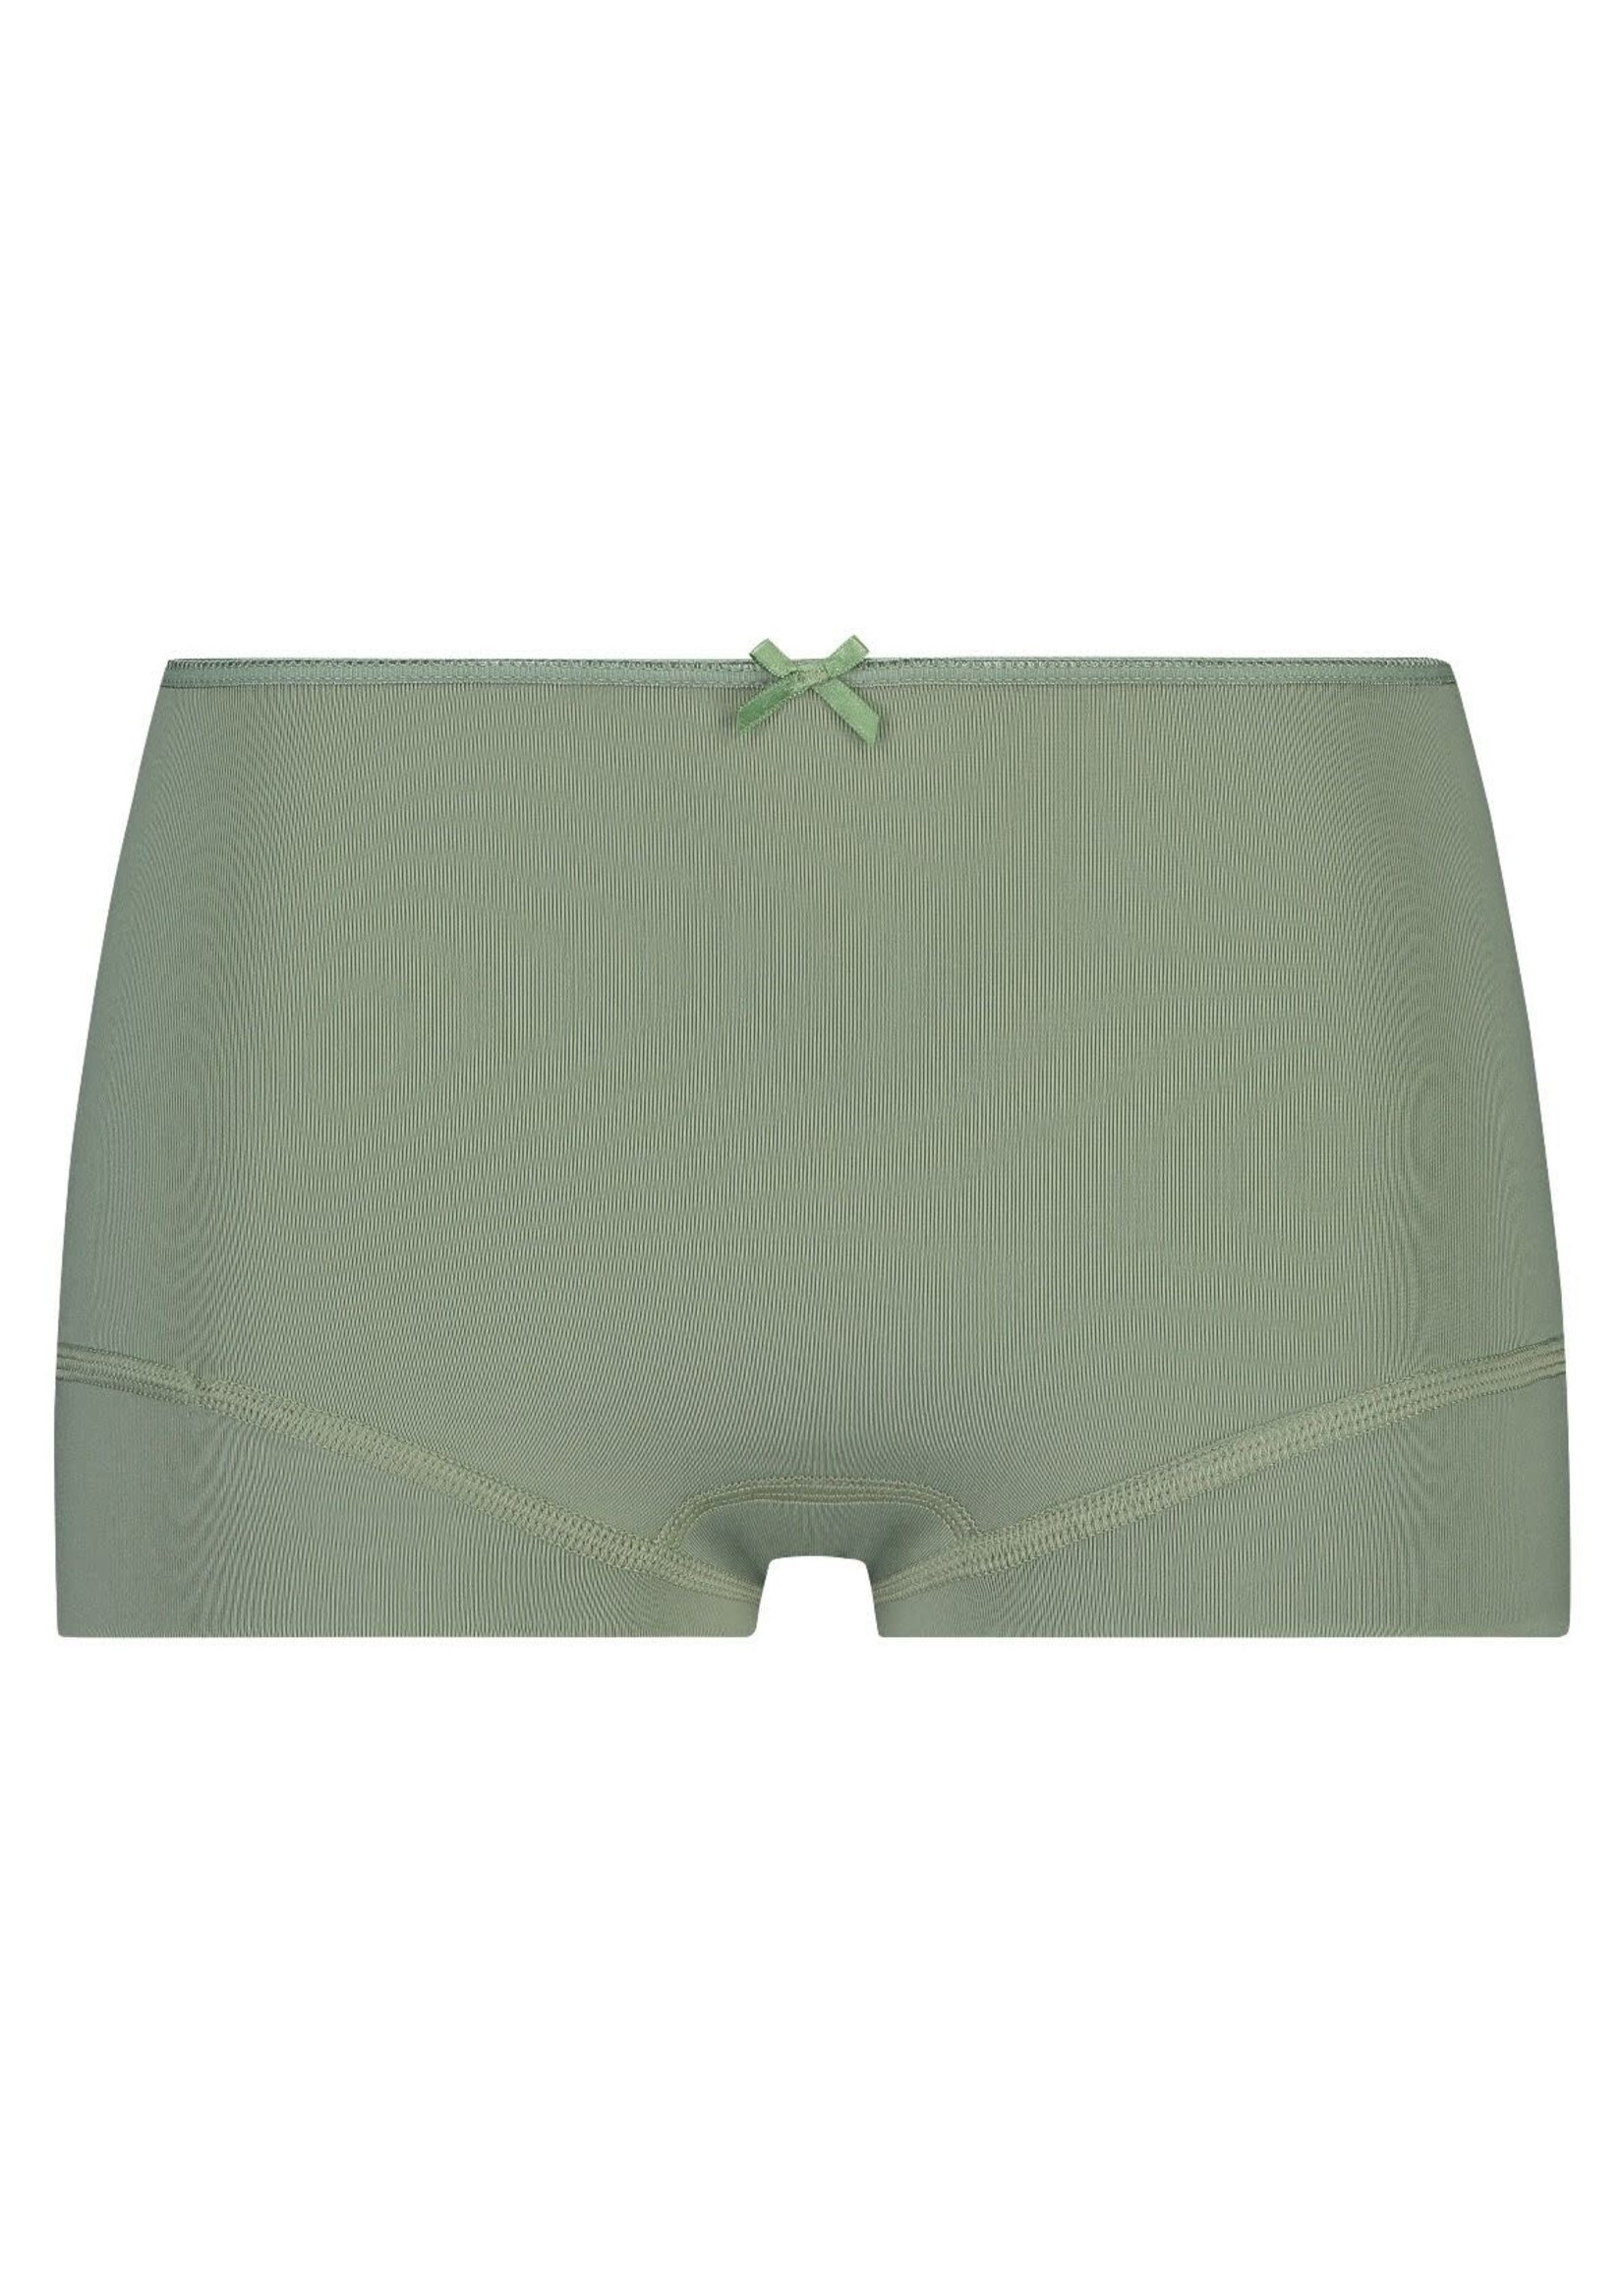 RJ underwear Short olijf groen